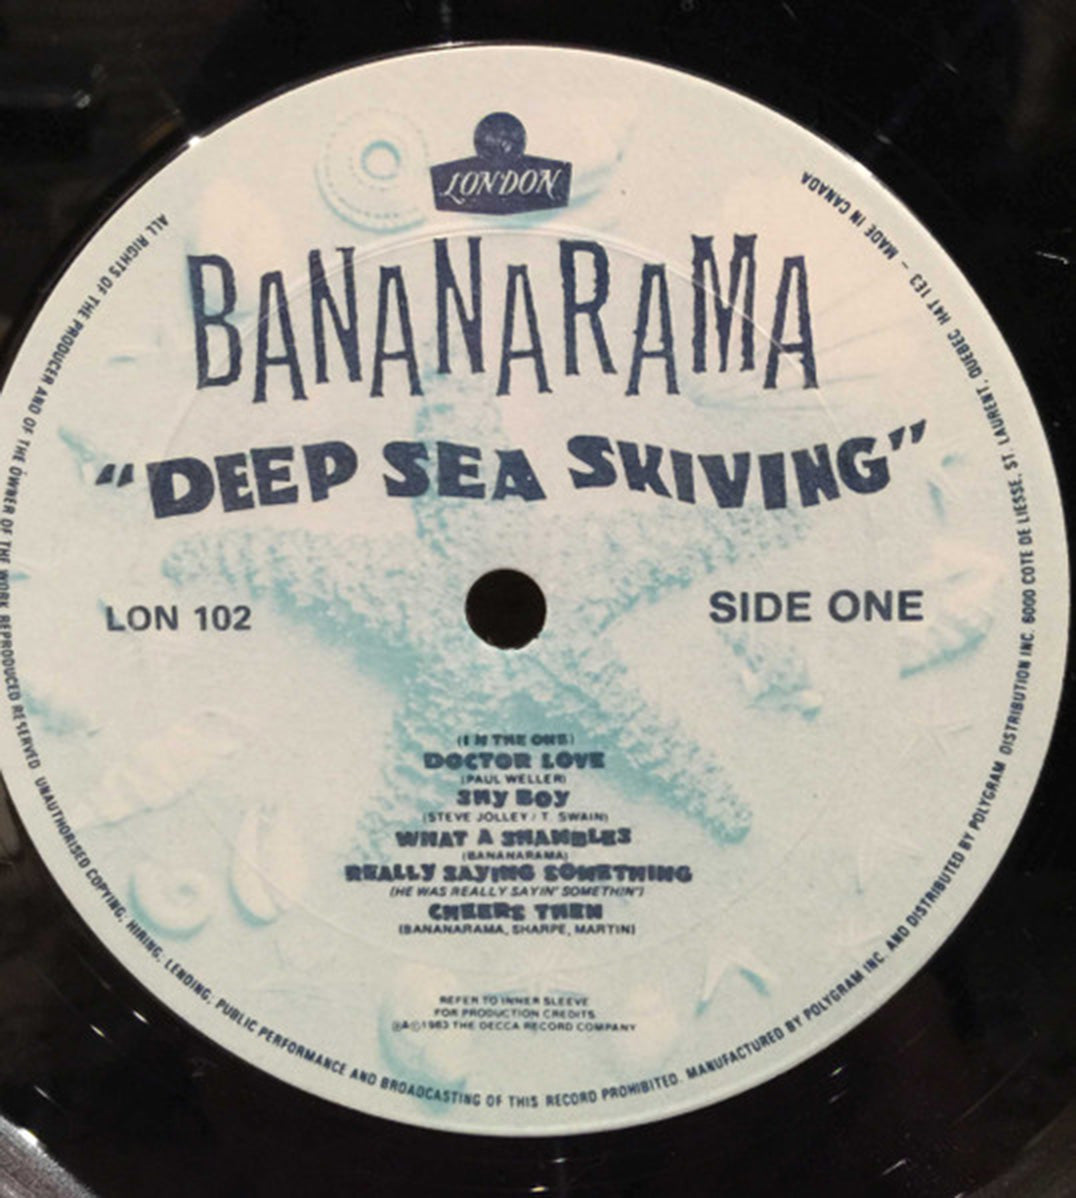 Bananarama – Deep Sea Skiving - 1983 Pressing